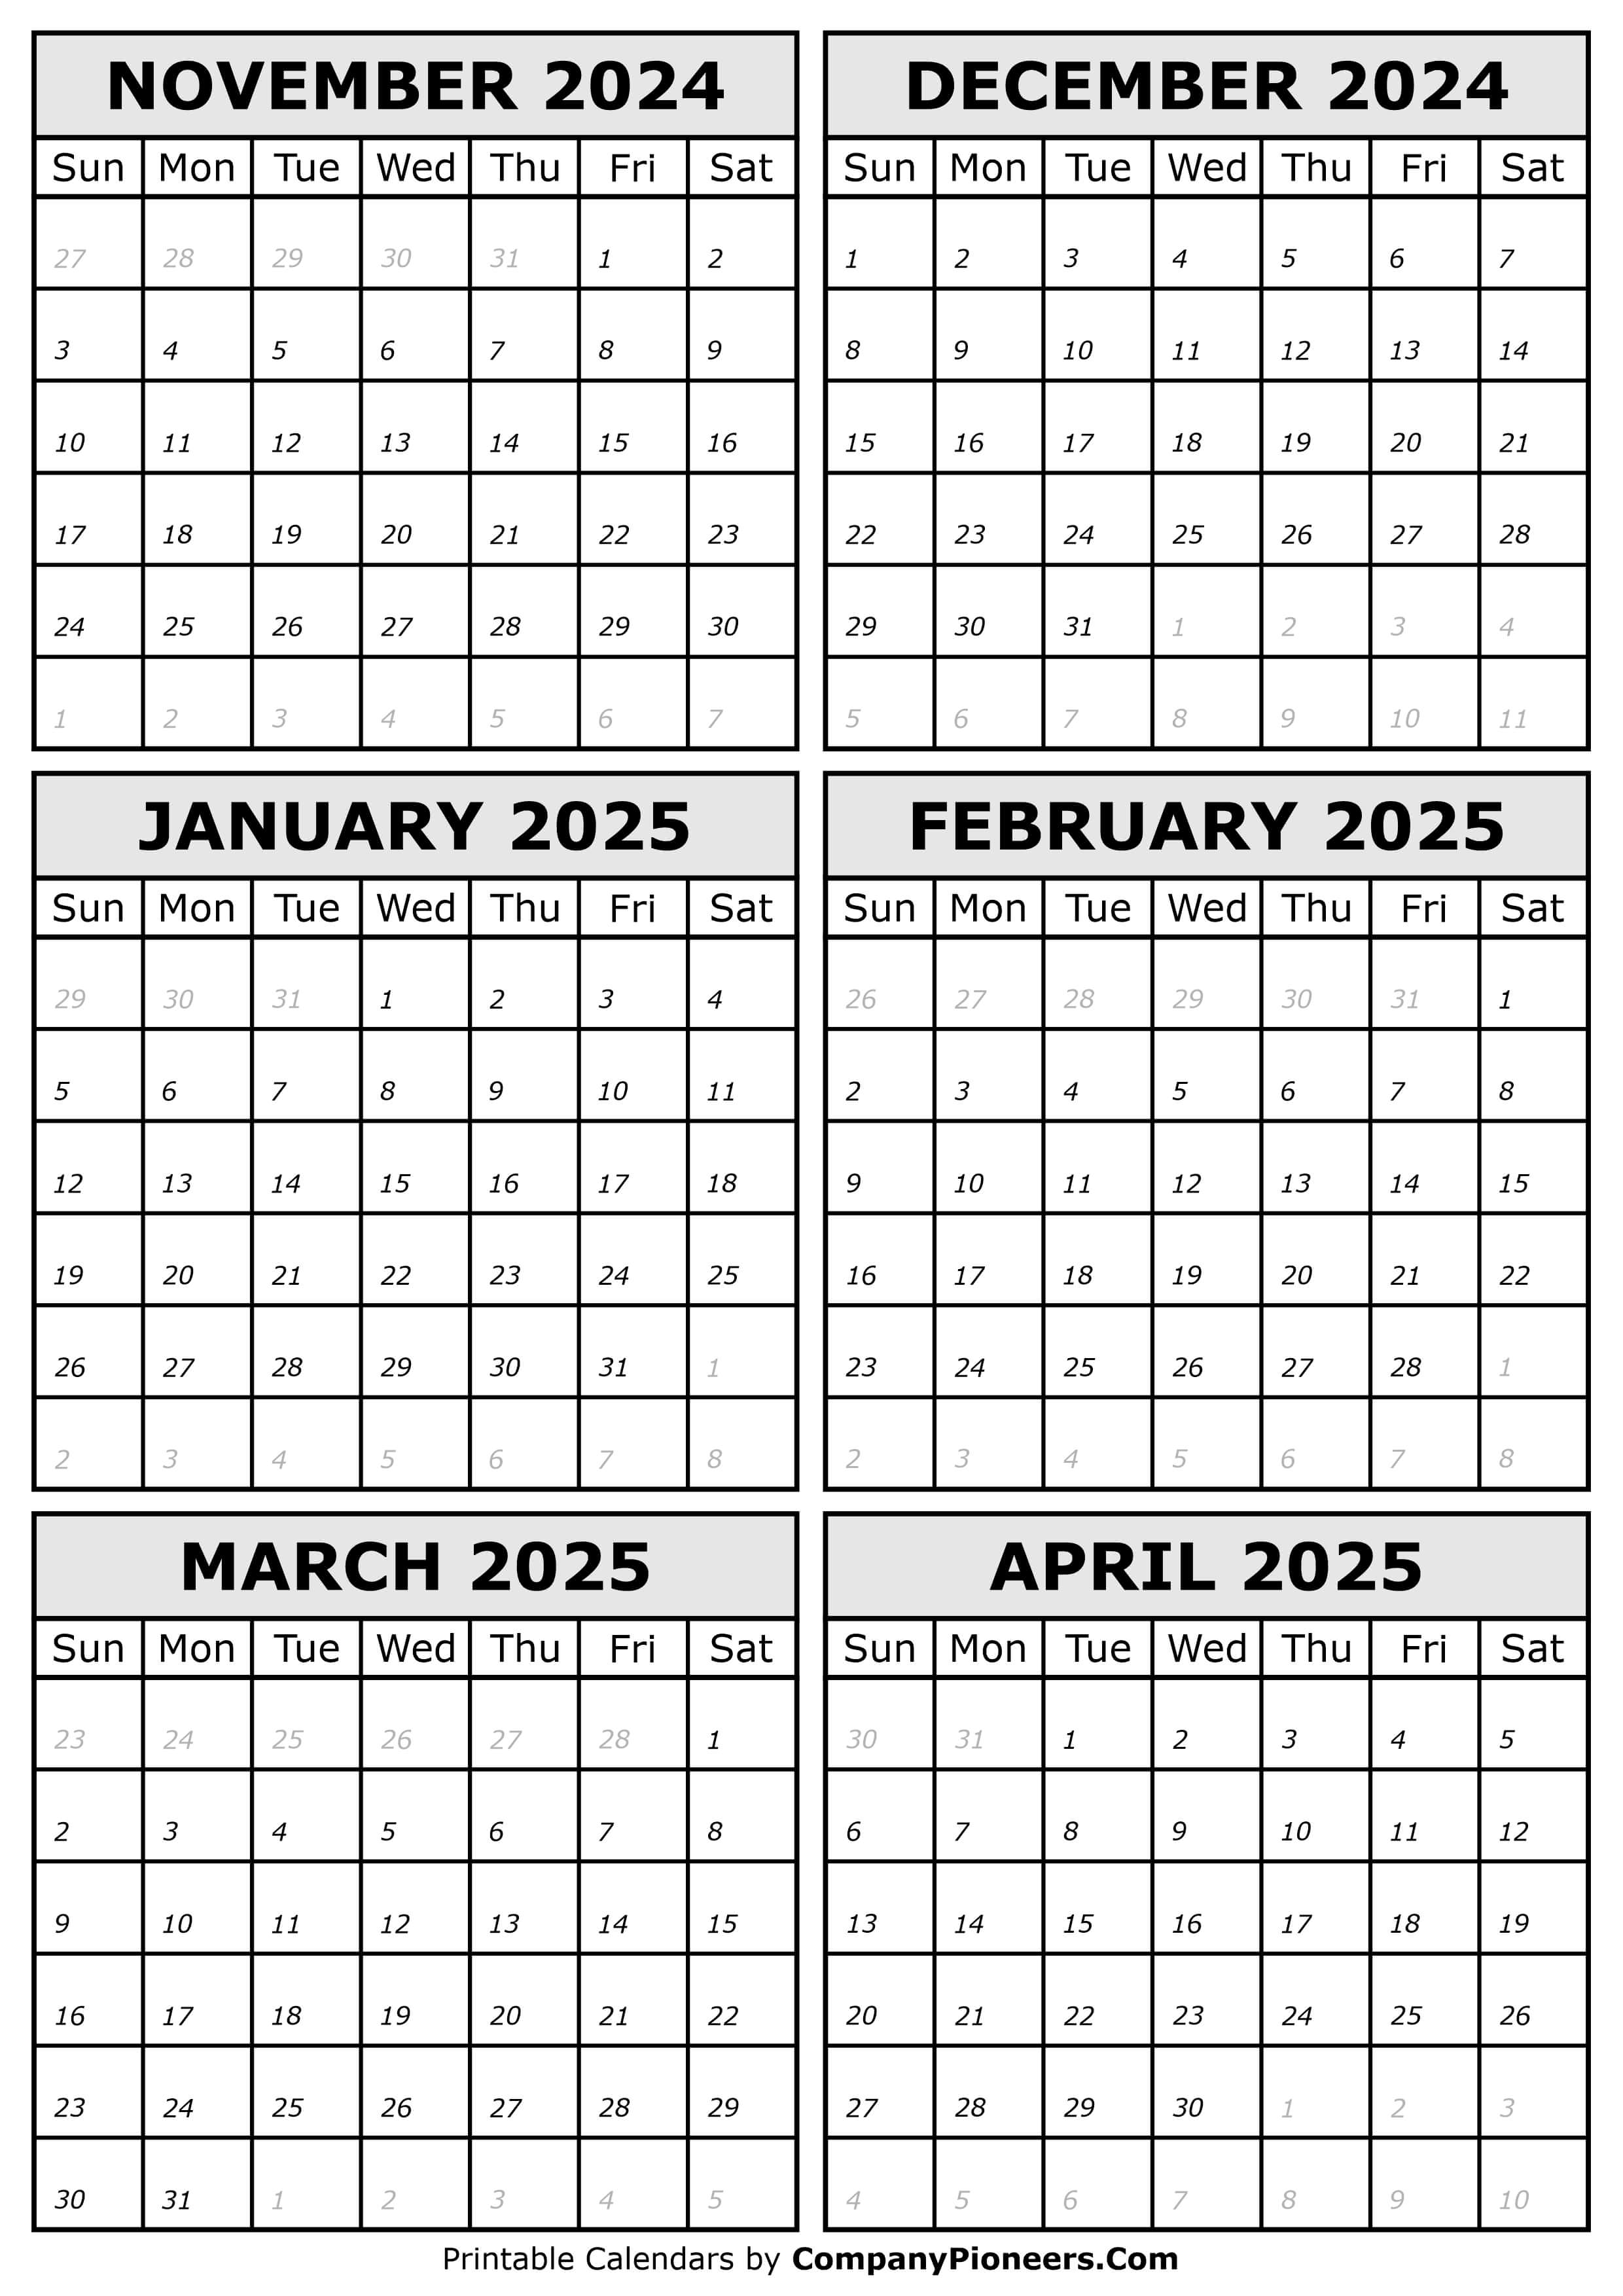 2024 November to 2025 April Calendar